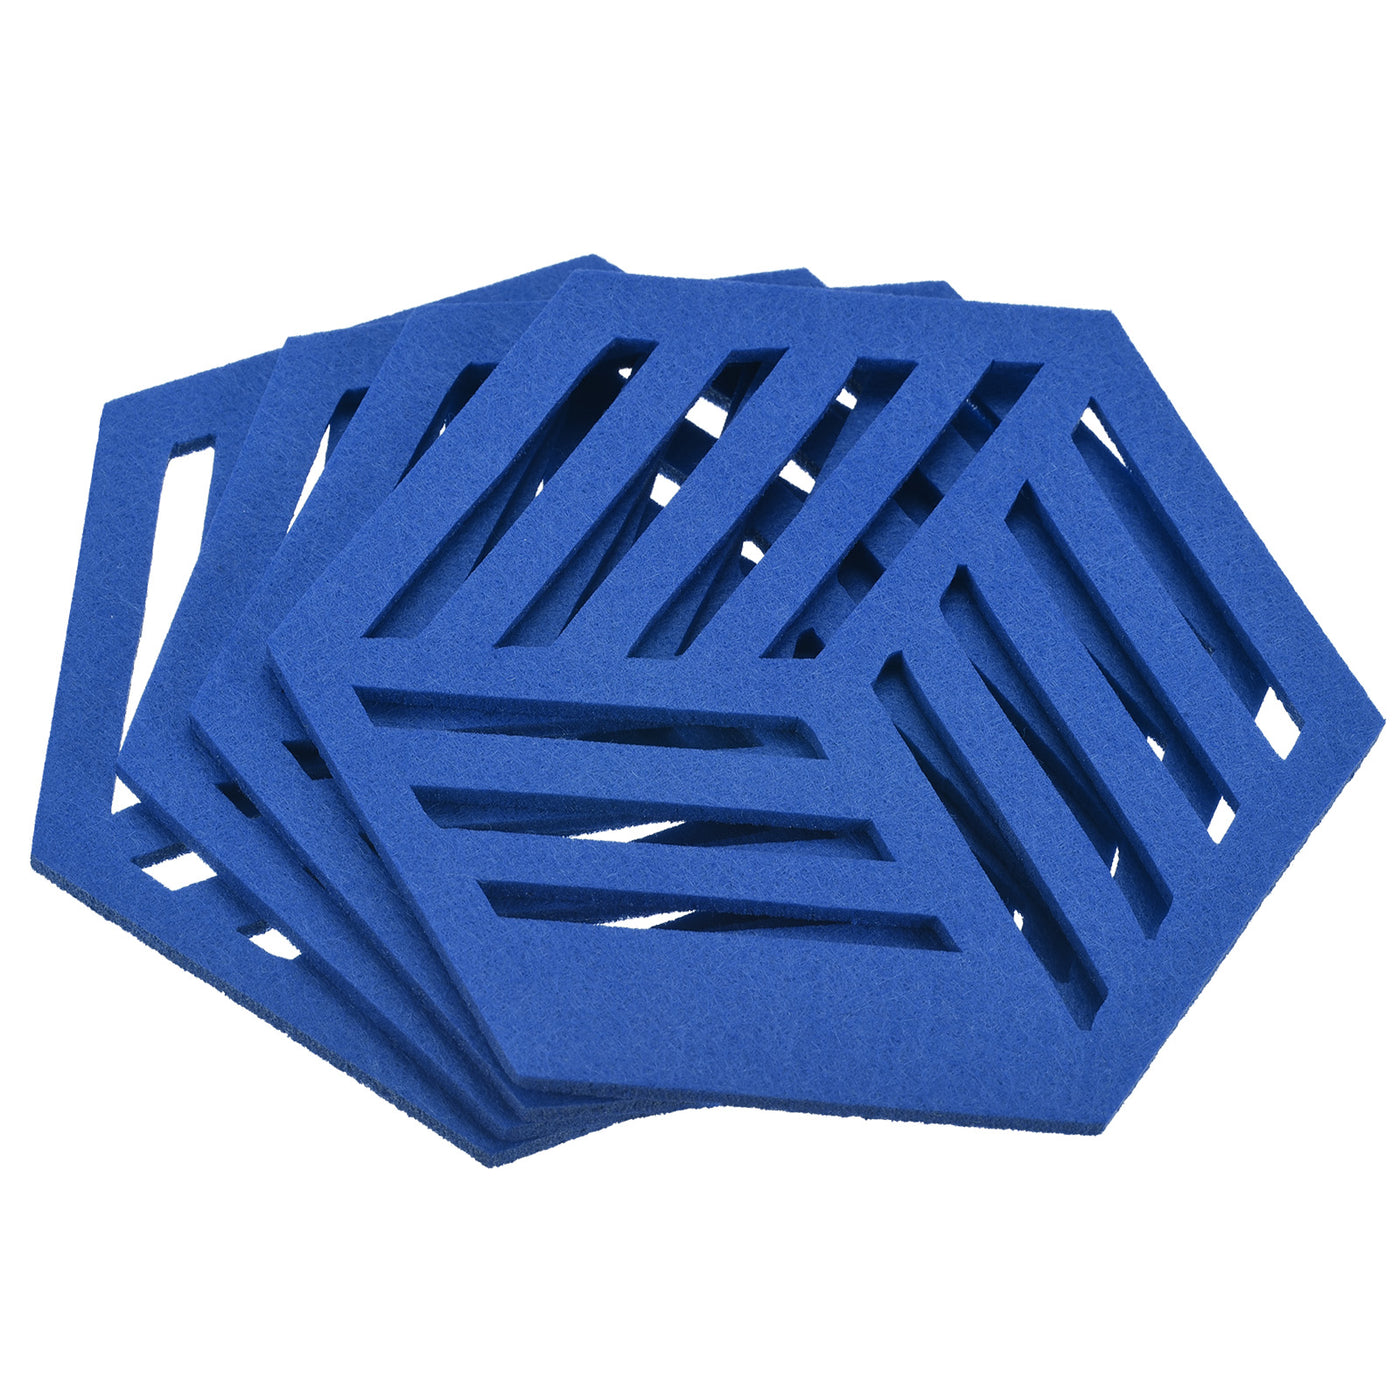 uxcell Uxcell Felt Coasters, 4pcs Hexagon Mat Pad Coaster for Drink Cup Pot Bowl Vase, Blue